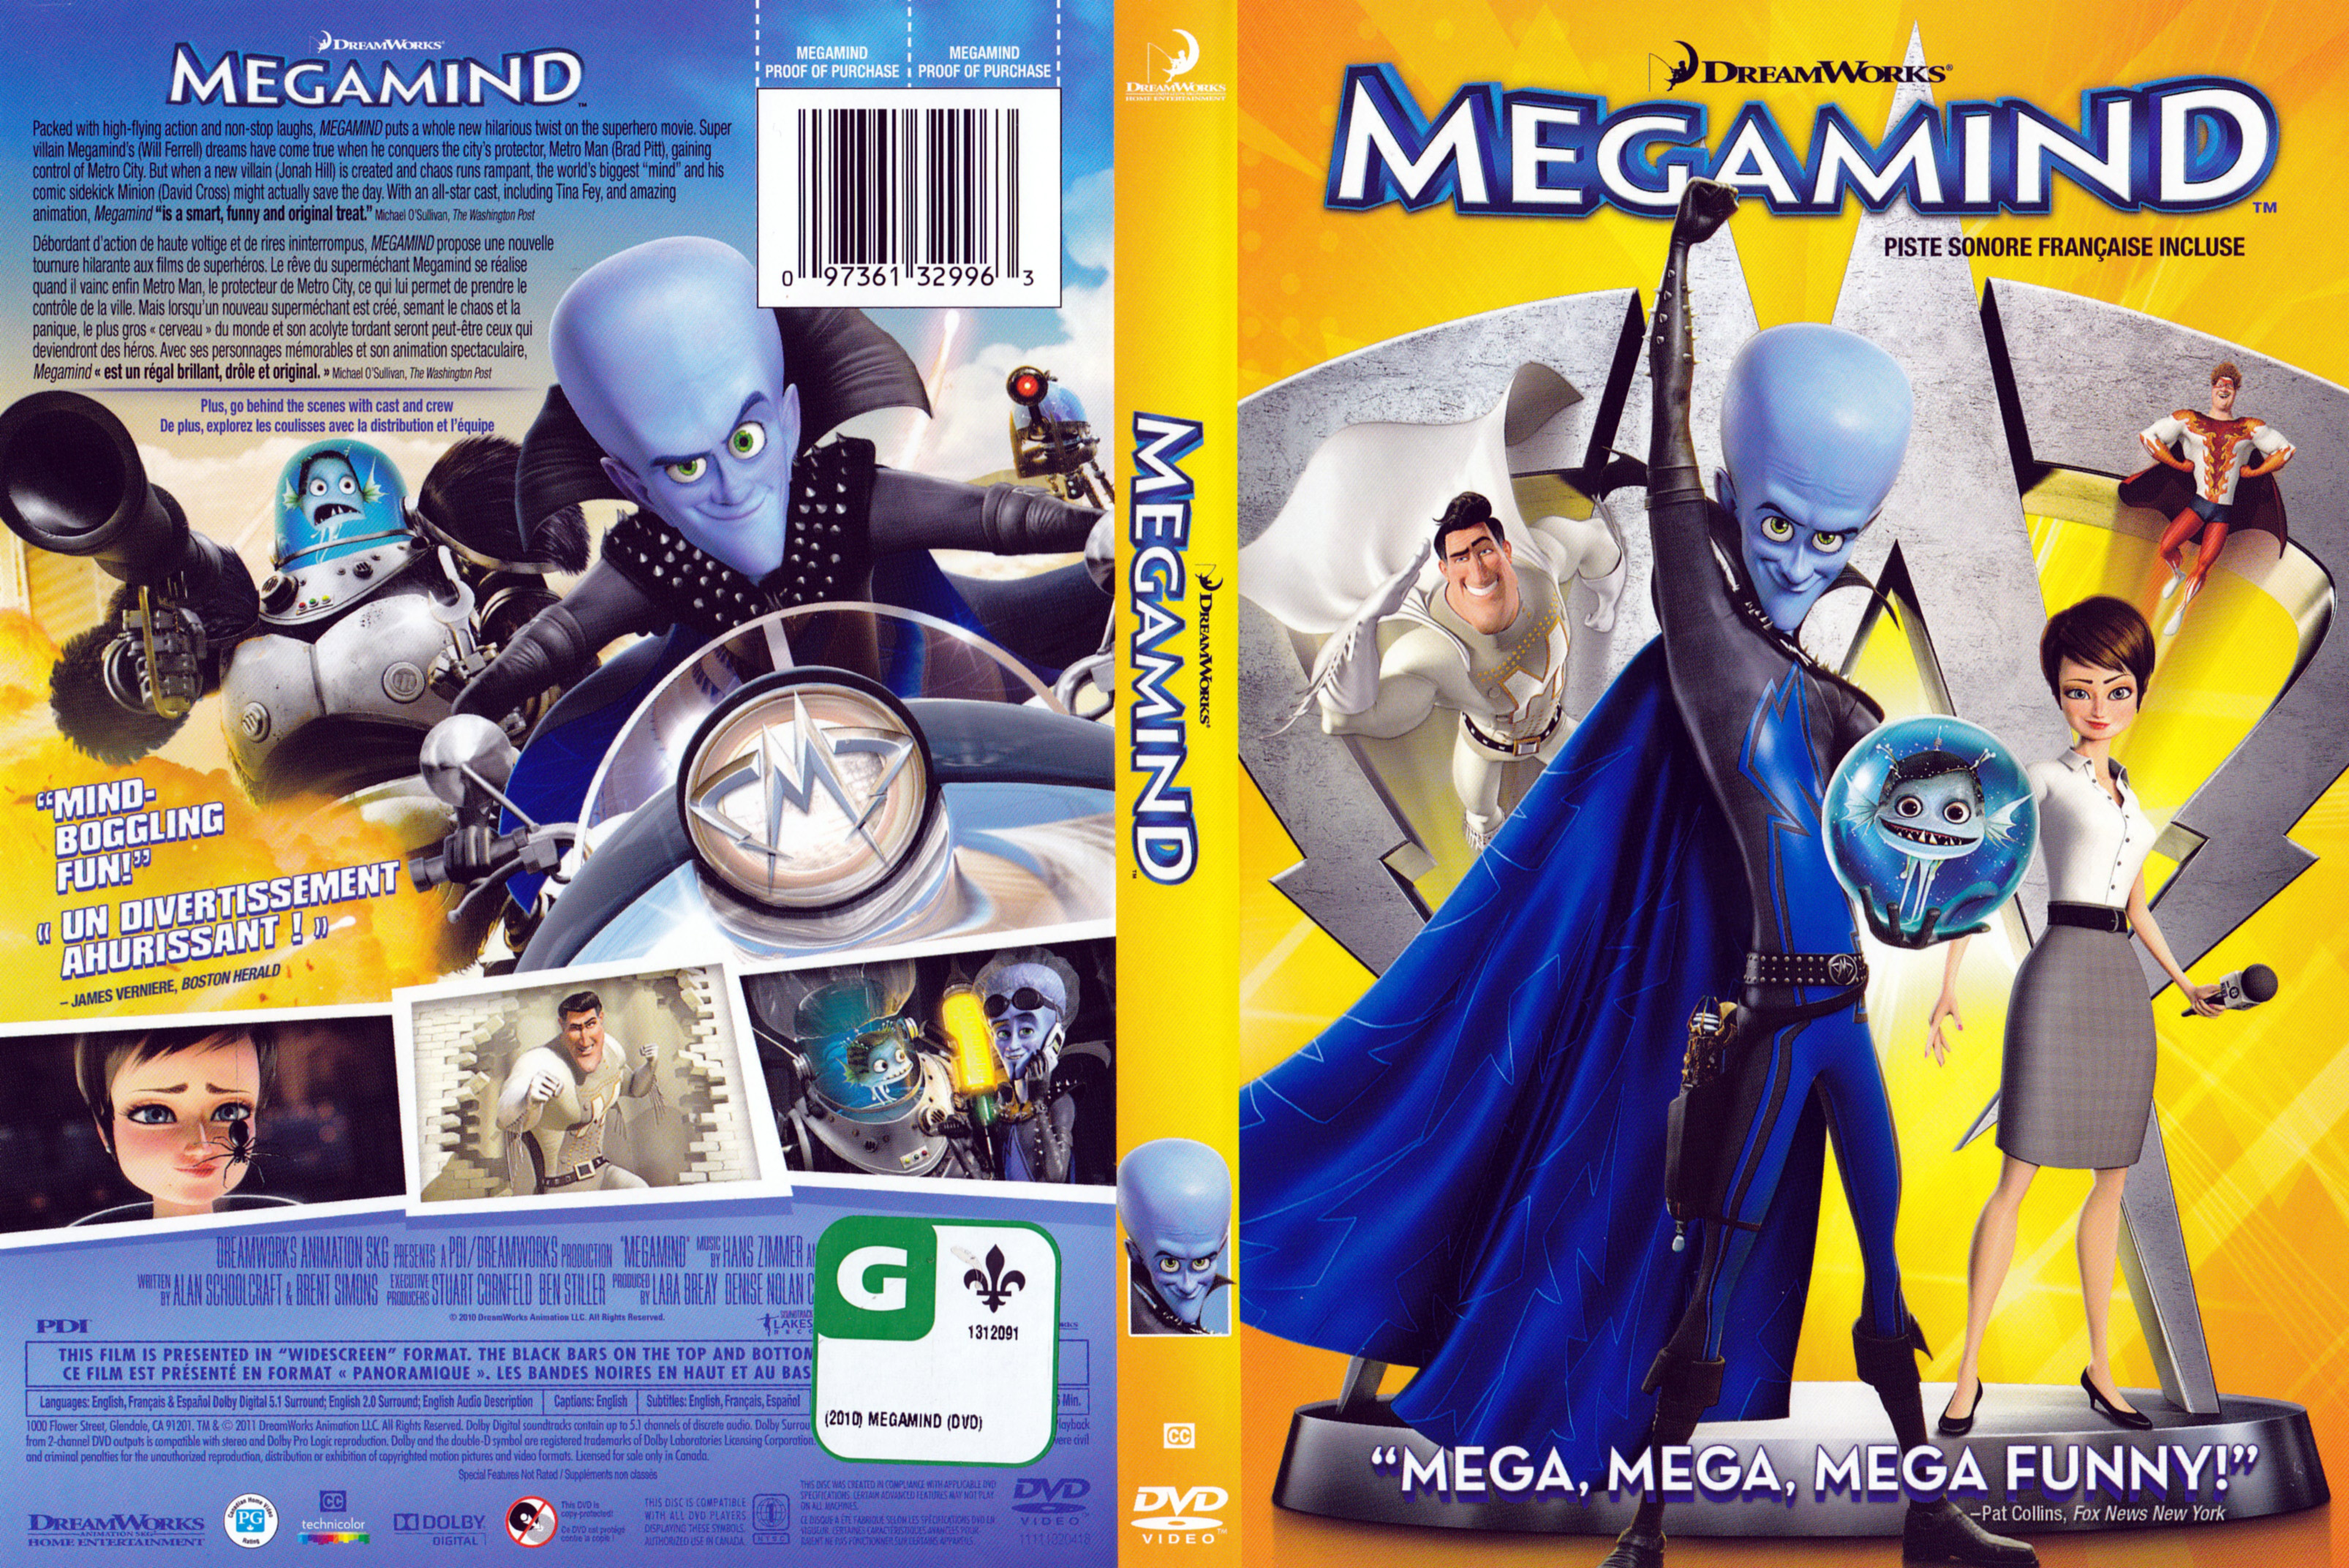 Jaquette DVD Megamind (Canadienne)